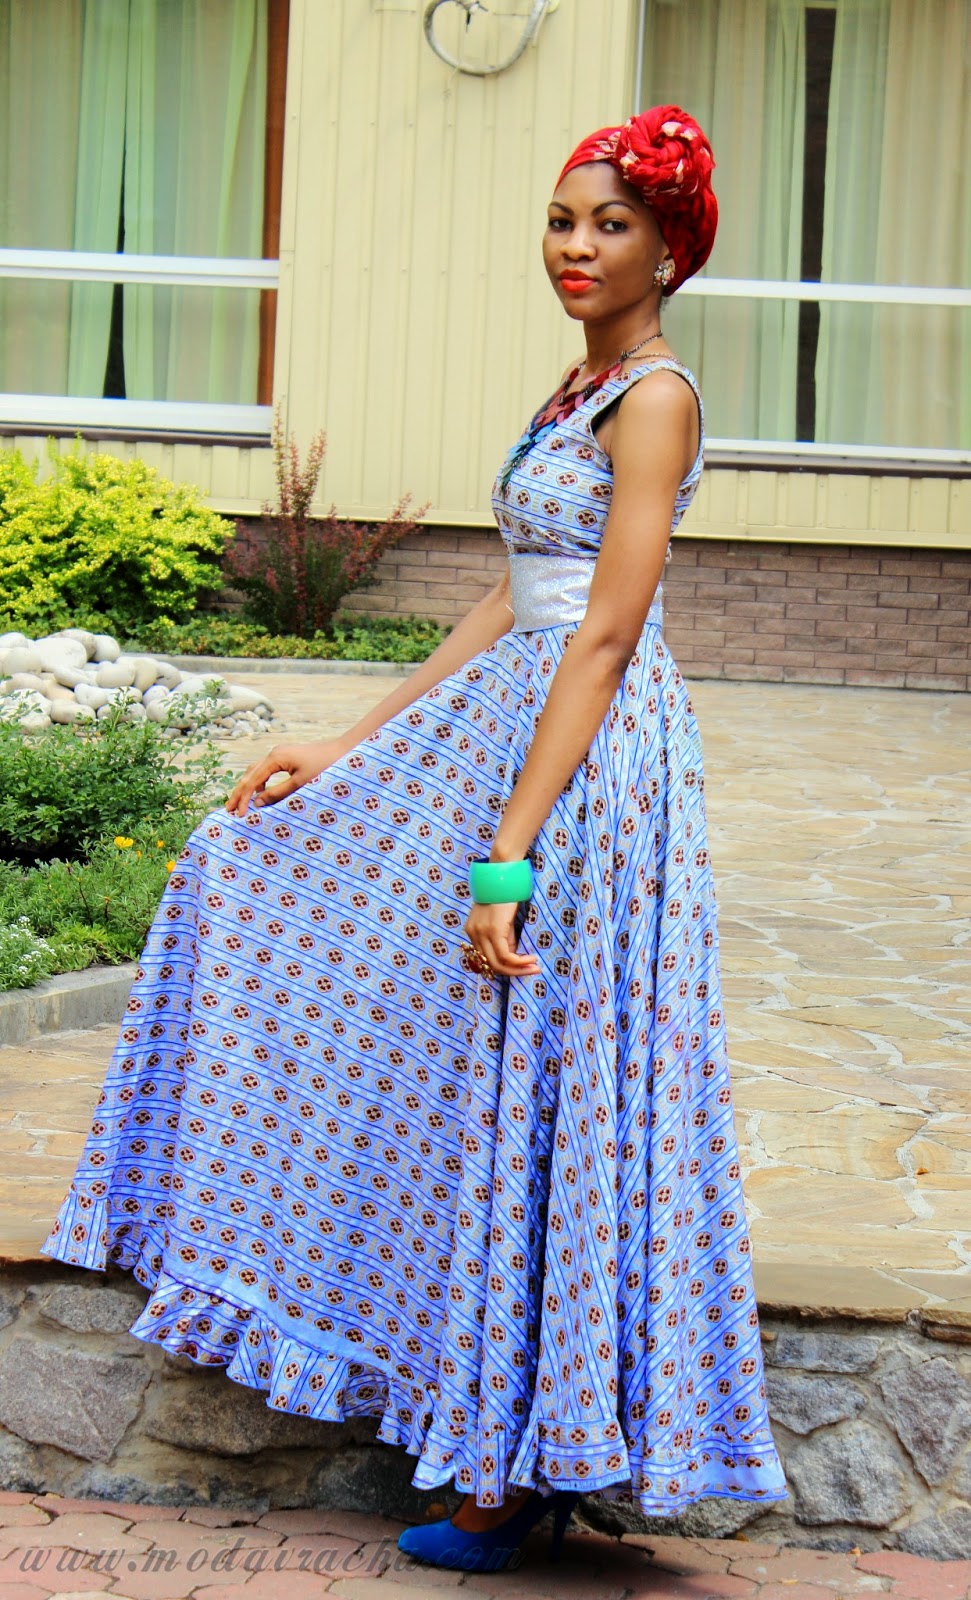 ... blogger modavracha wearing #ankarastyle long dress and head wrap